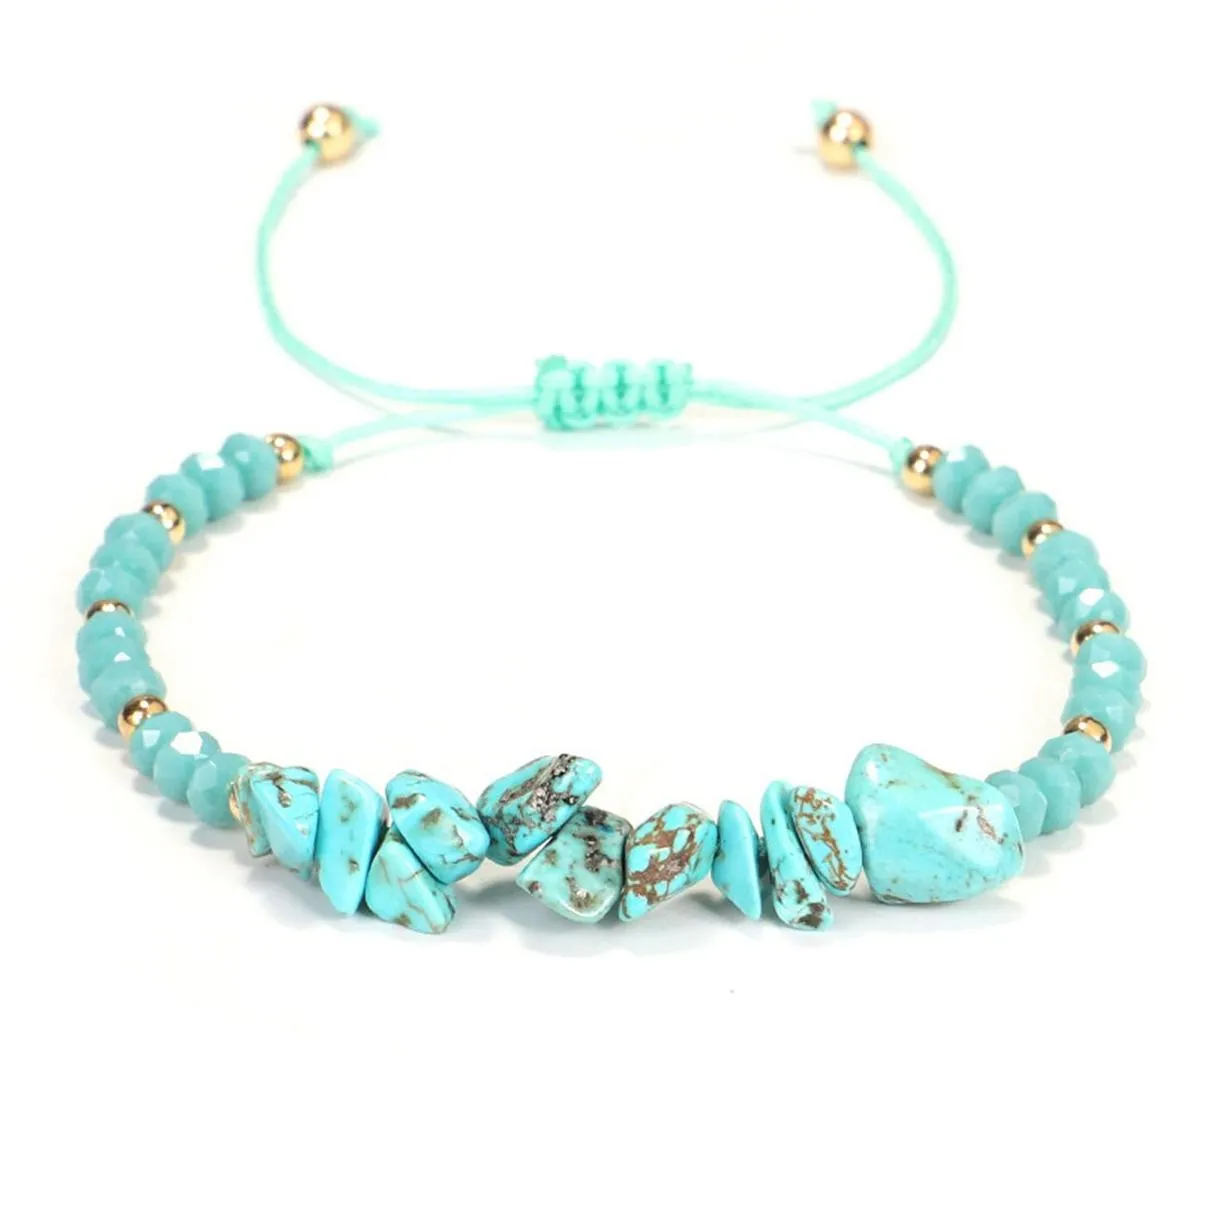 Fashion Jewelry Amethyst Rose Quartz Hand-woven Bracelet Color Irregular Broken Stone Bead Mixed Bracelet Adjustable